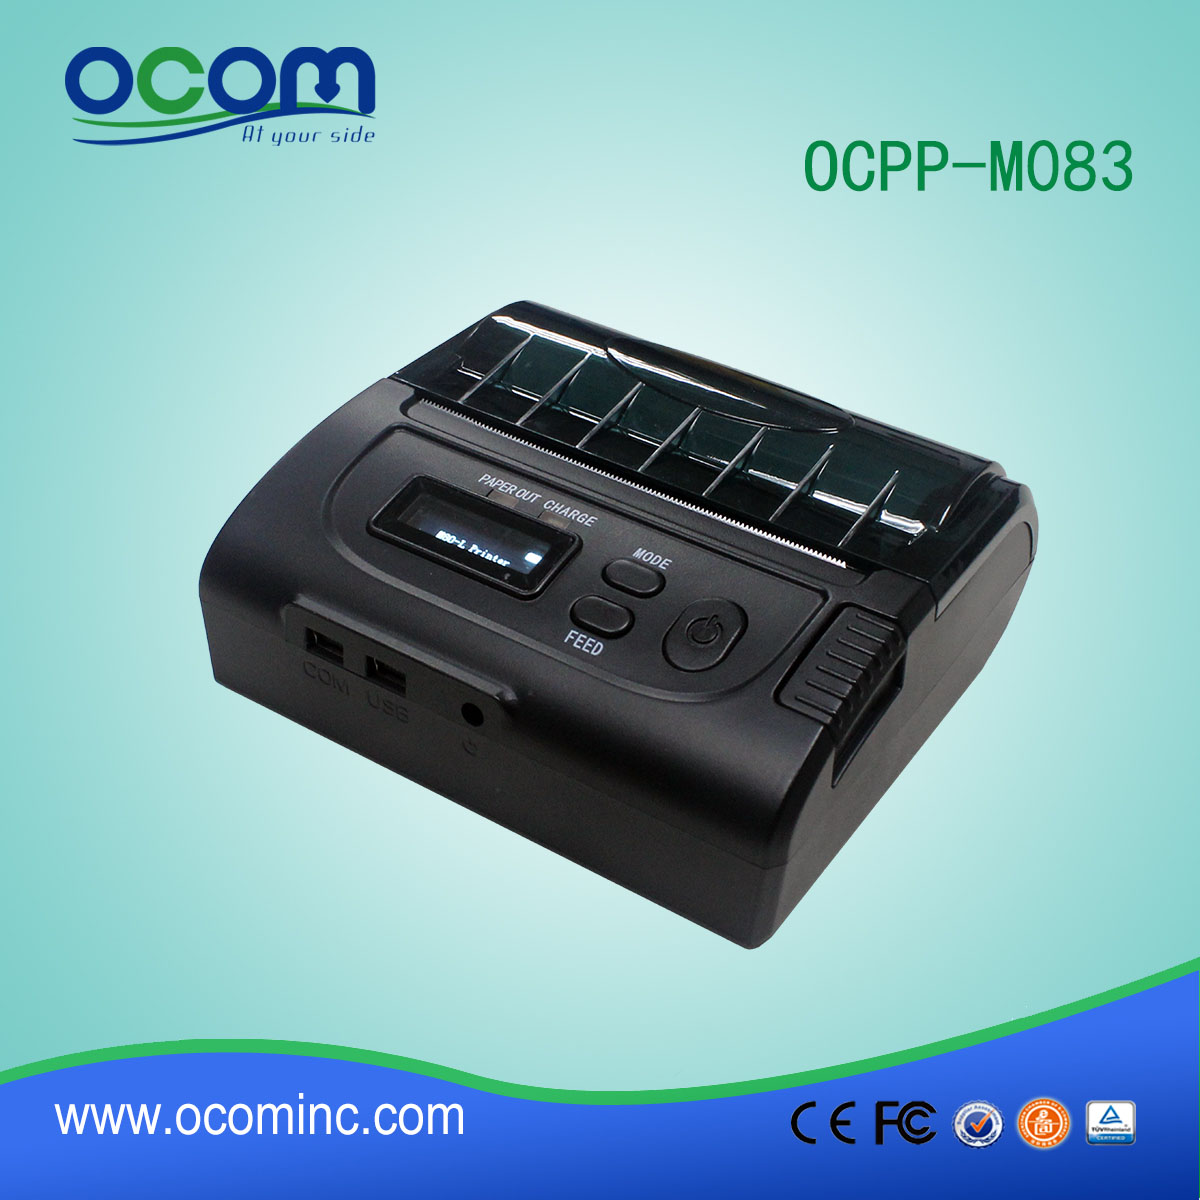 OCPP-M083 80mm support handheld mobiele bluetooth printer IOS